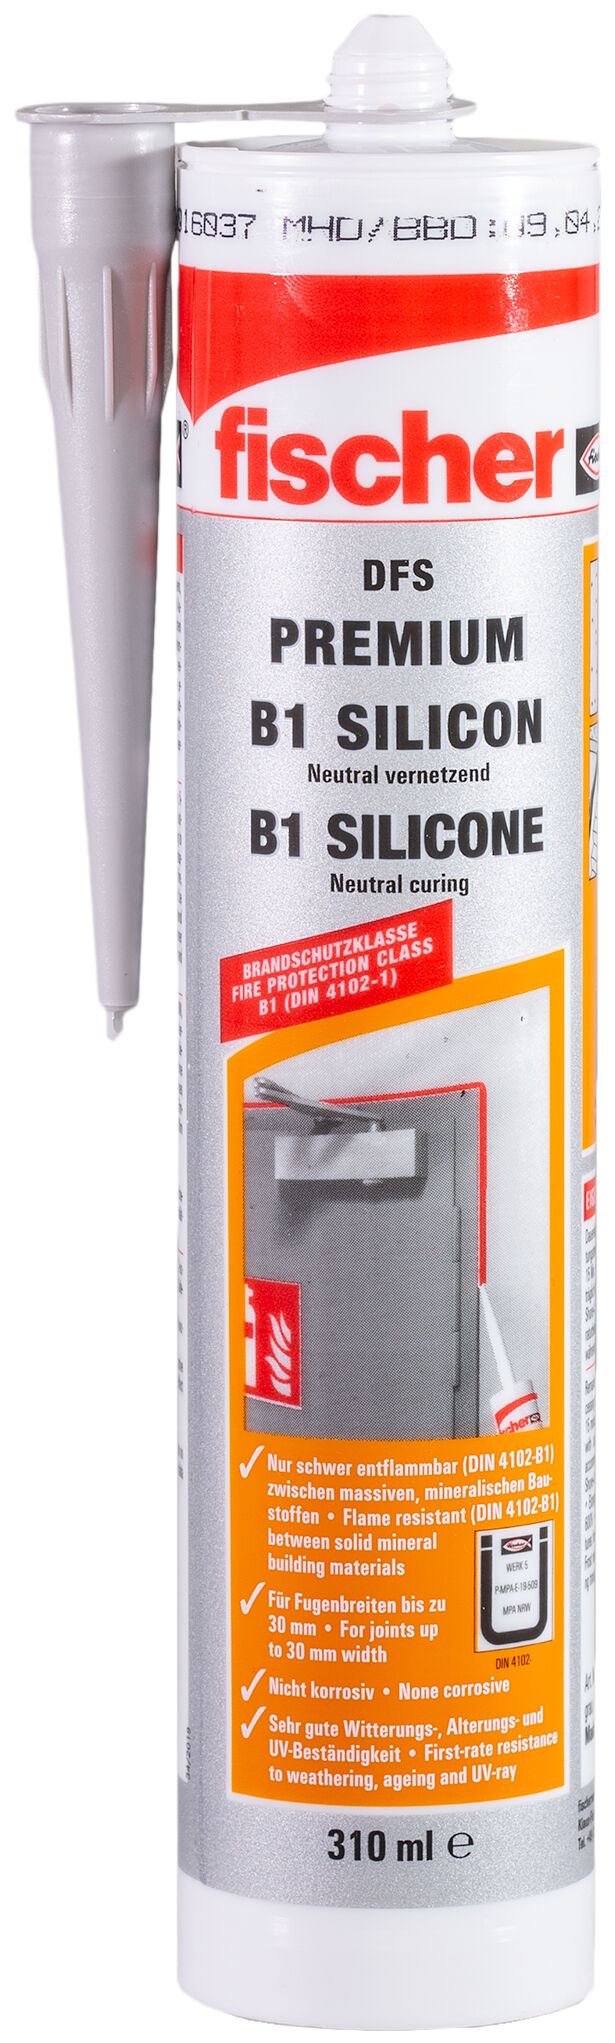 Premium B1 silicone DFS